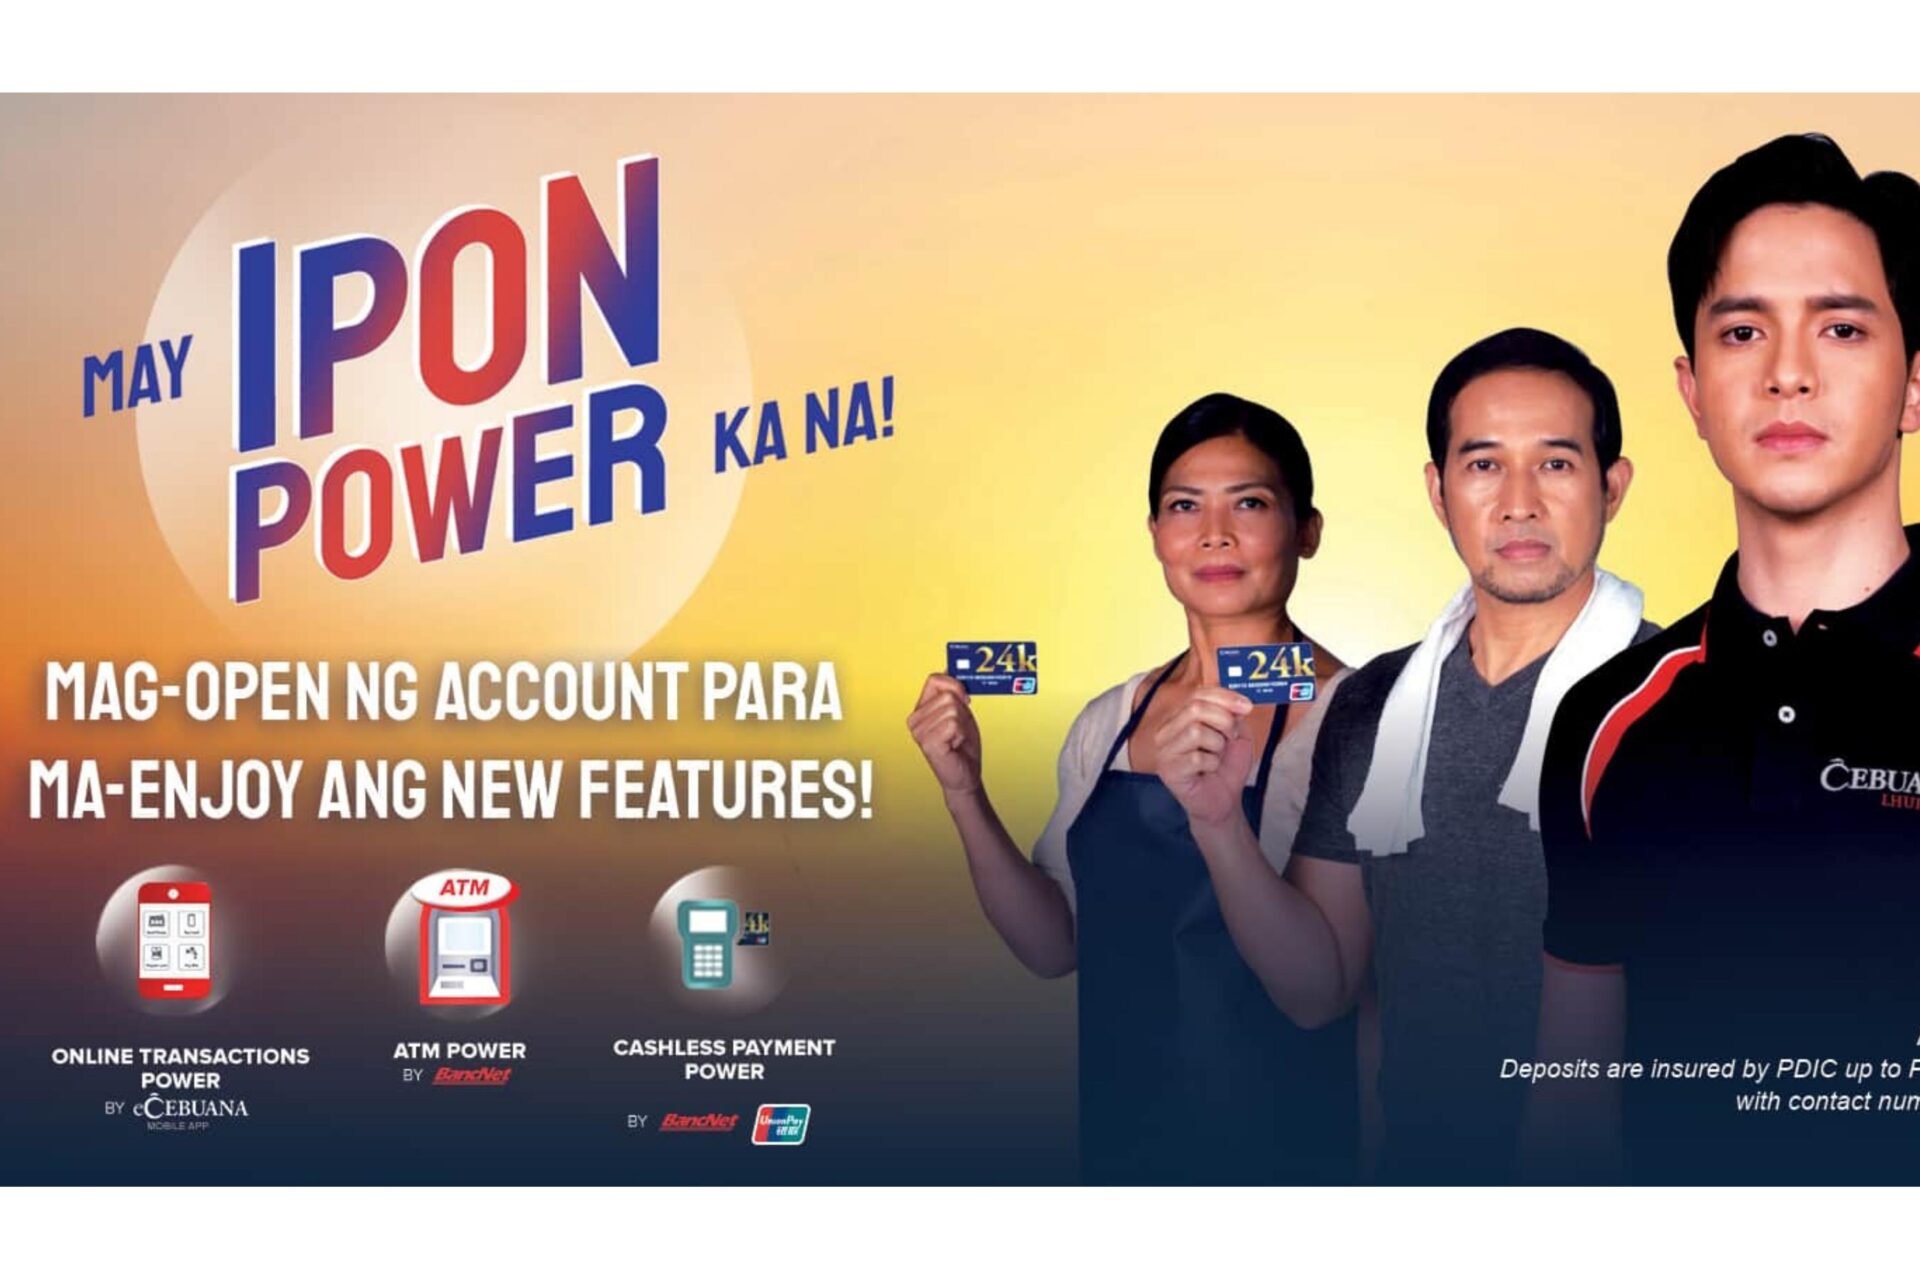 IPon Power for Filipinos